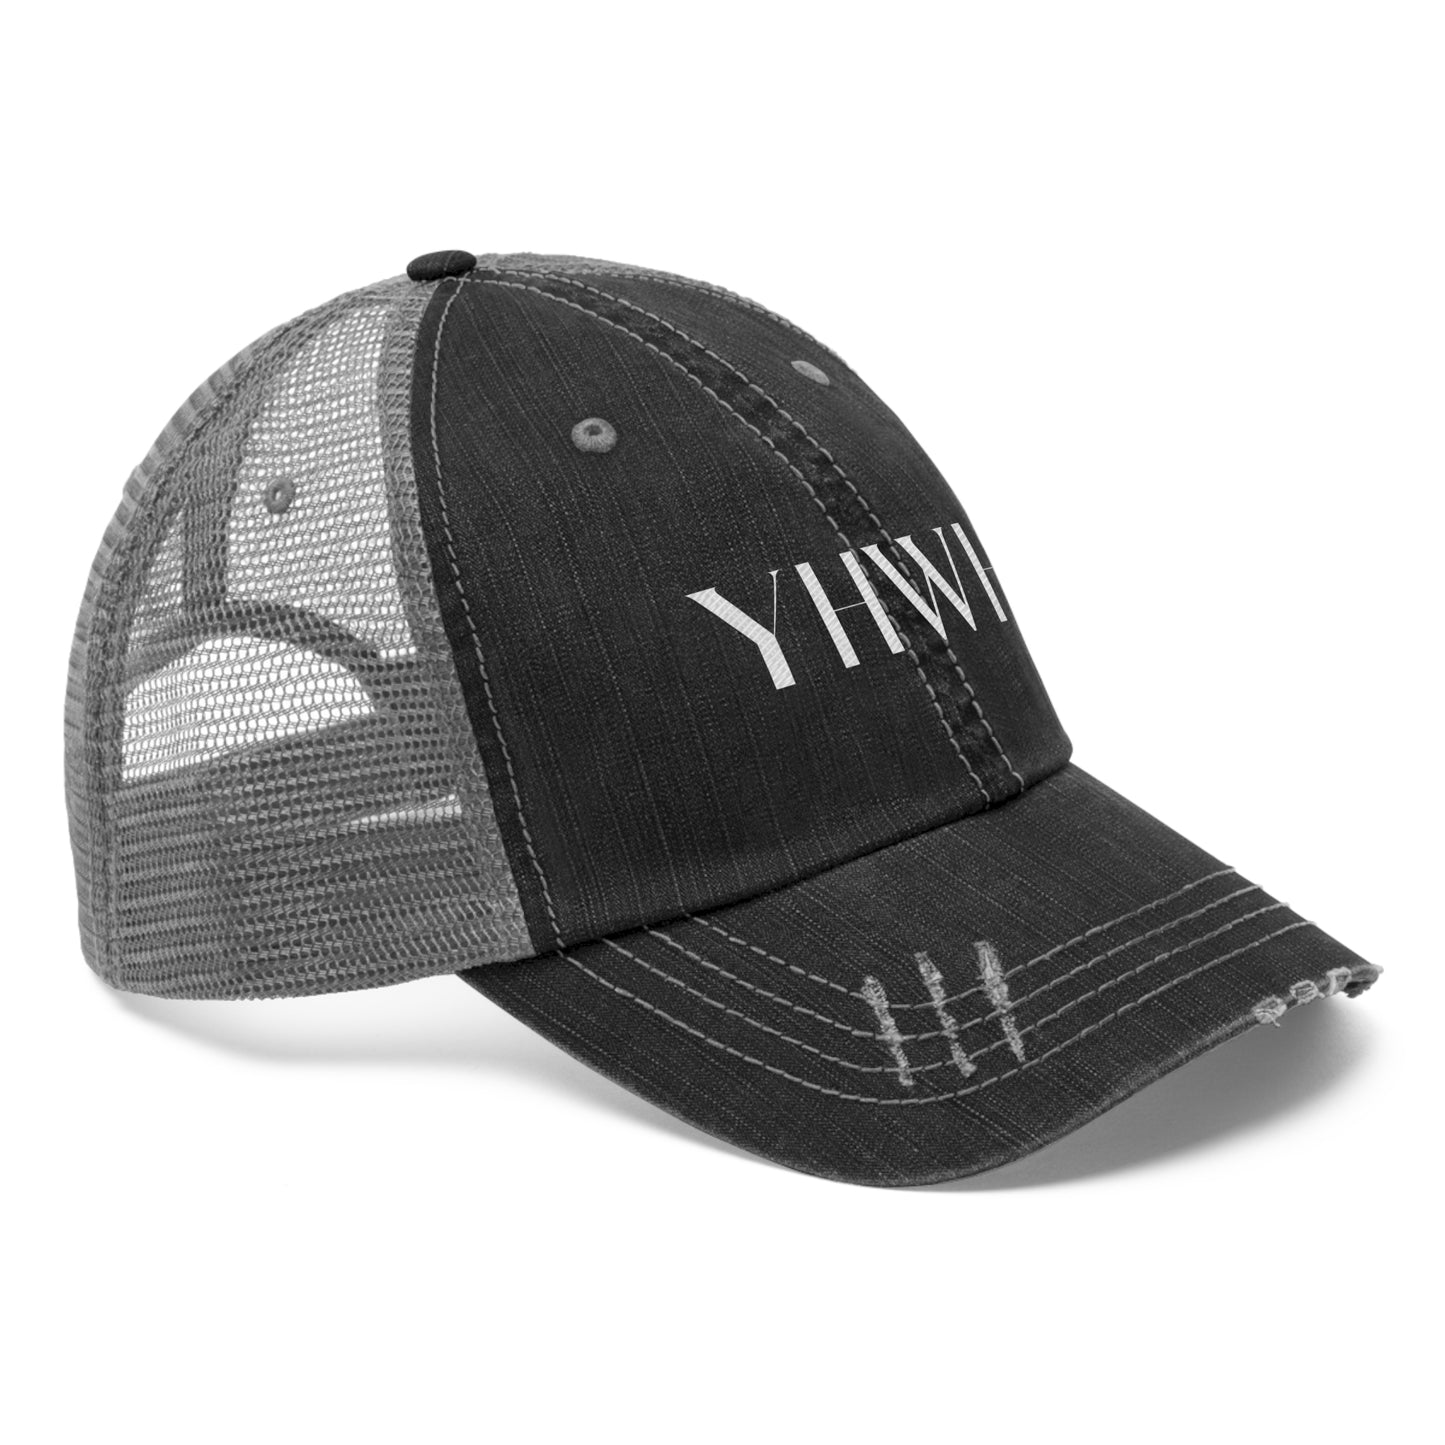 "YHWH" Trucker Hat